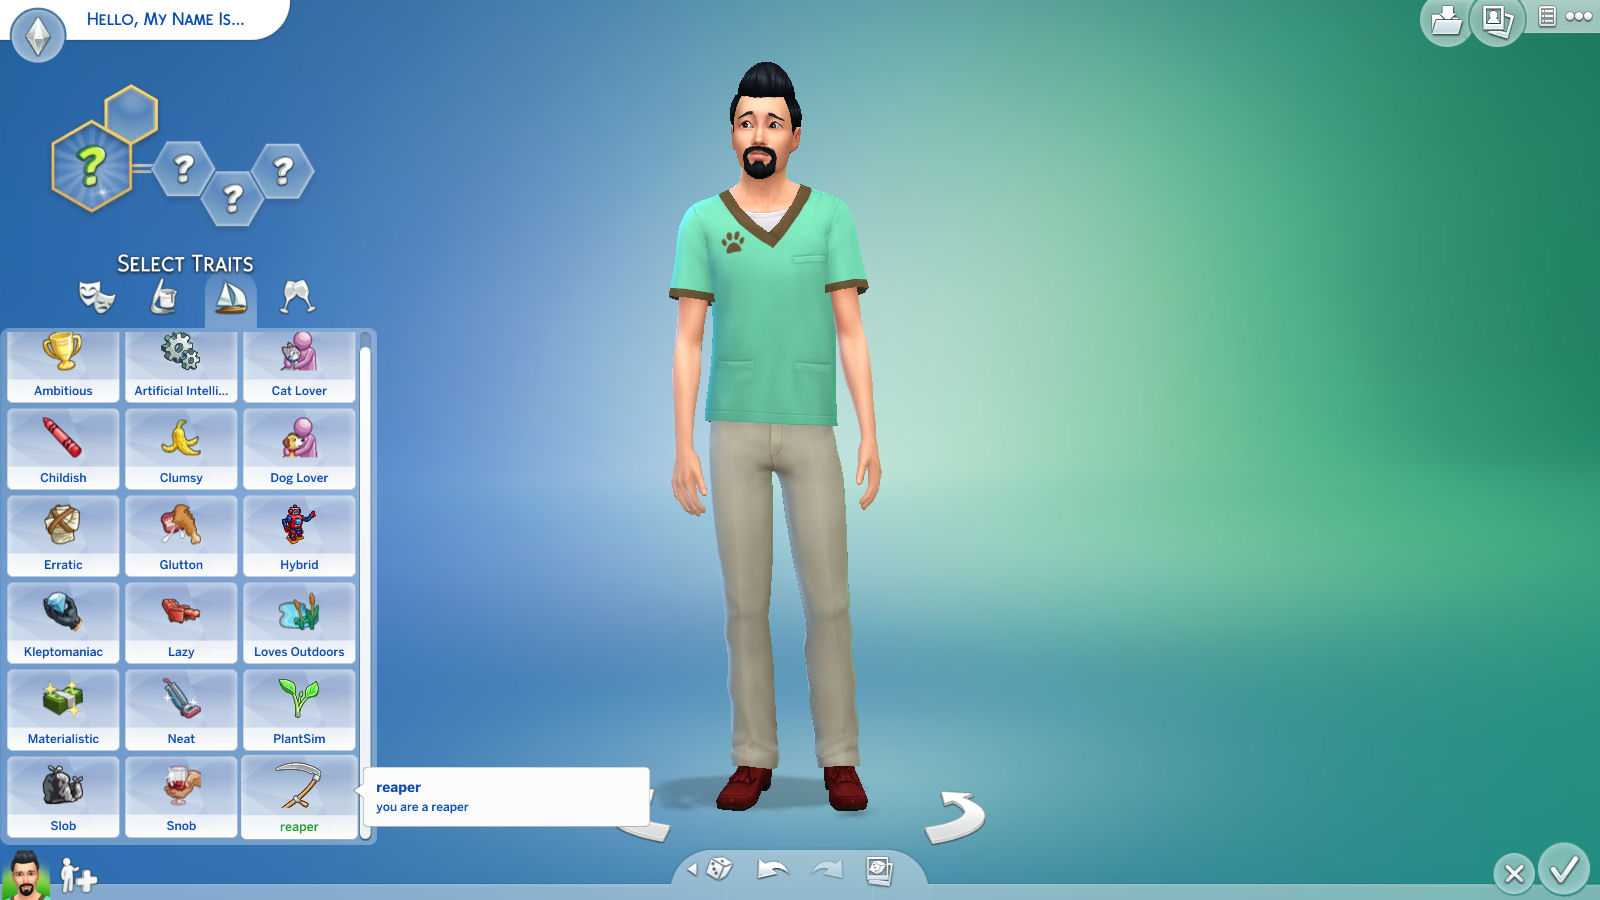 Mod The Sims Reaper Trait.